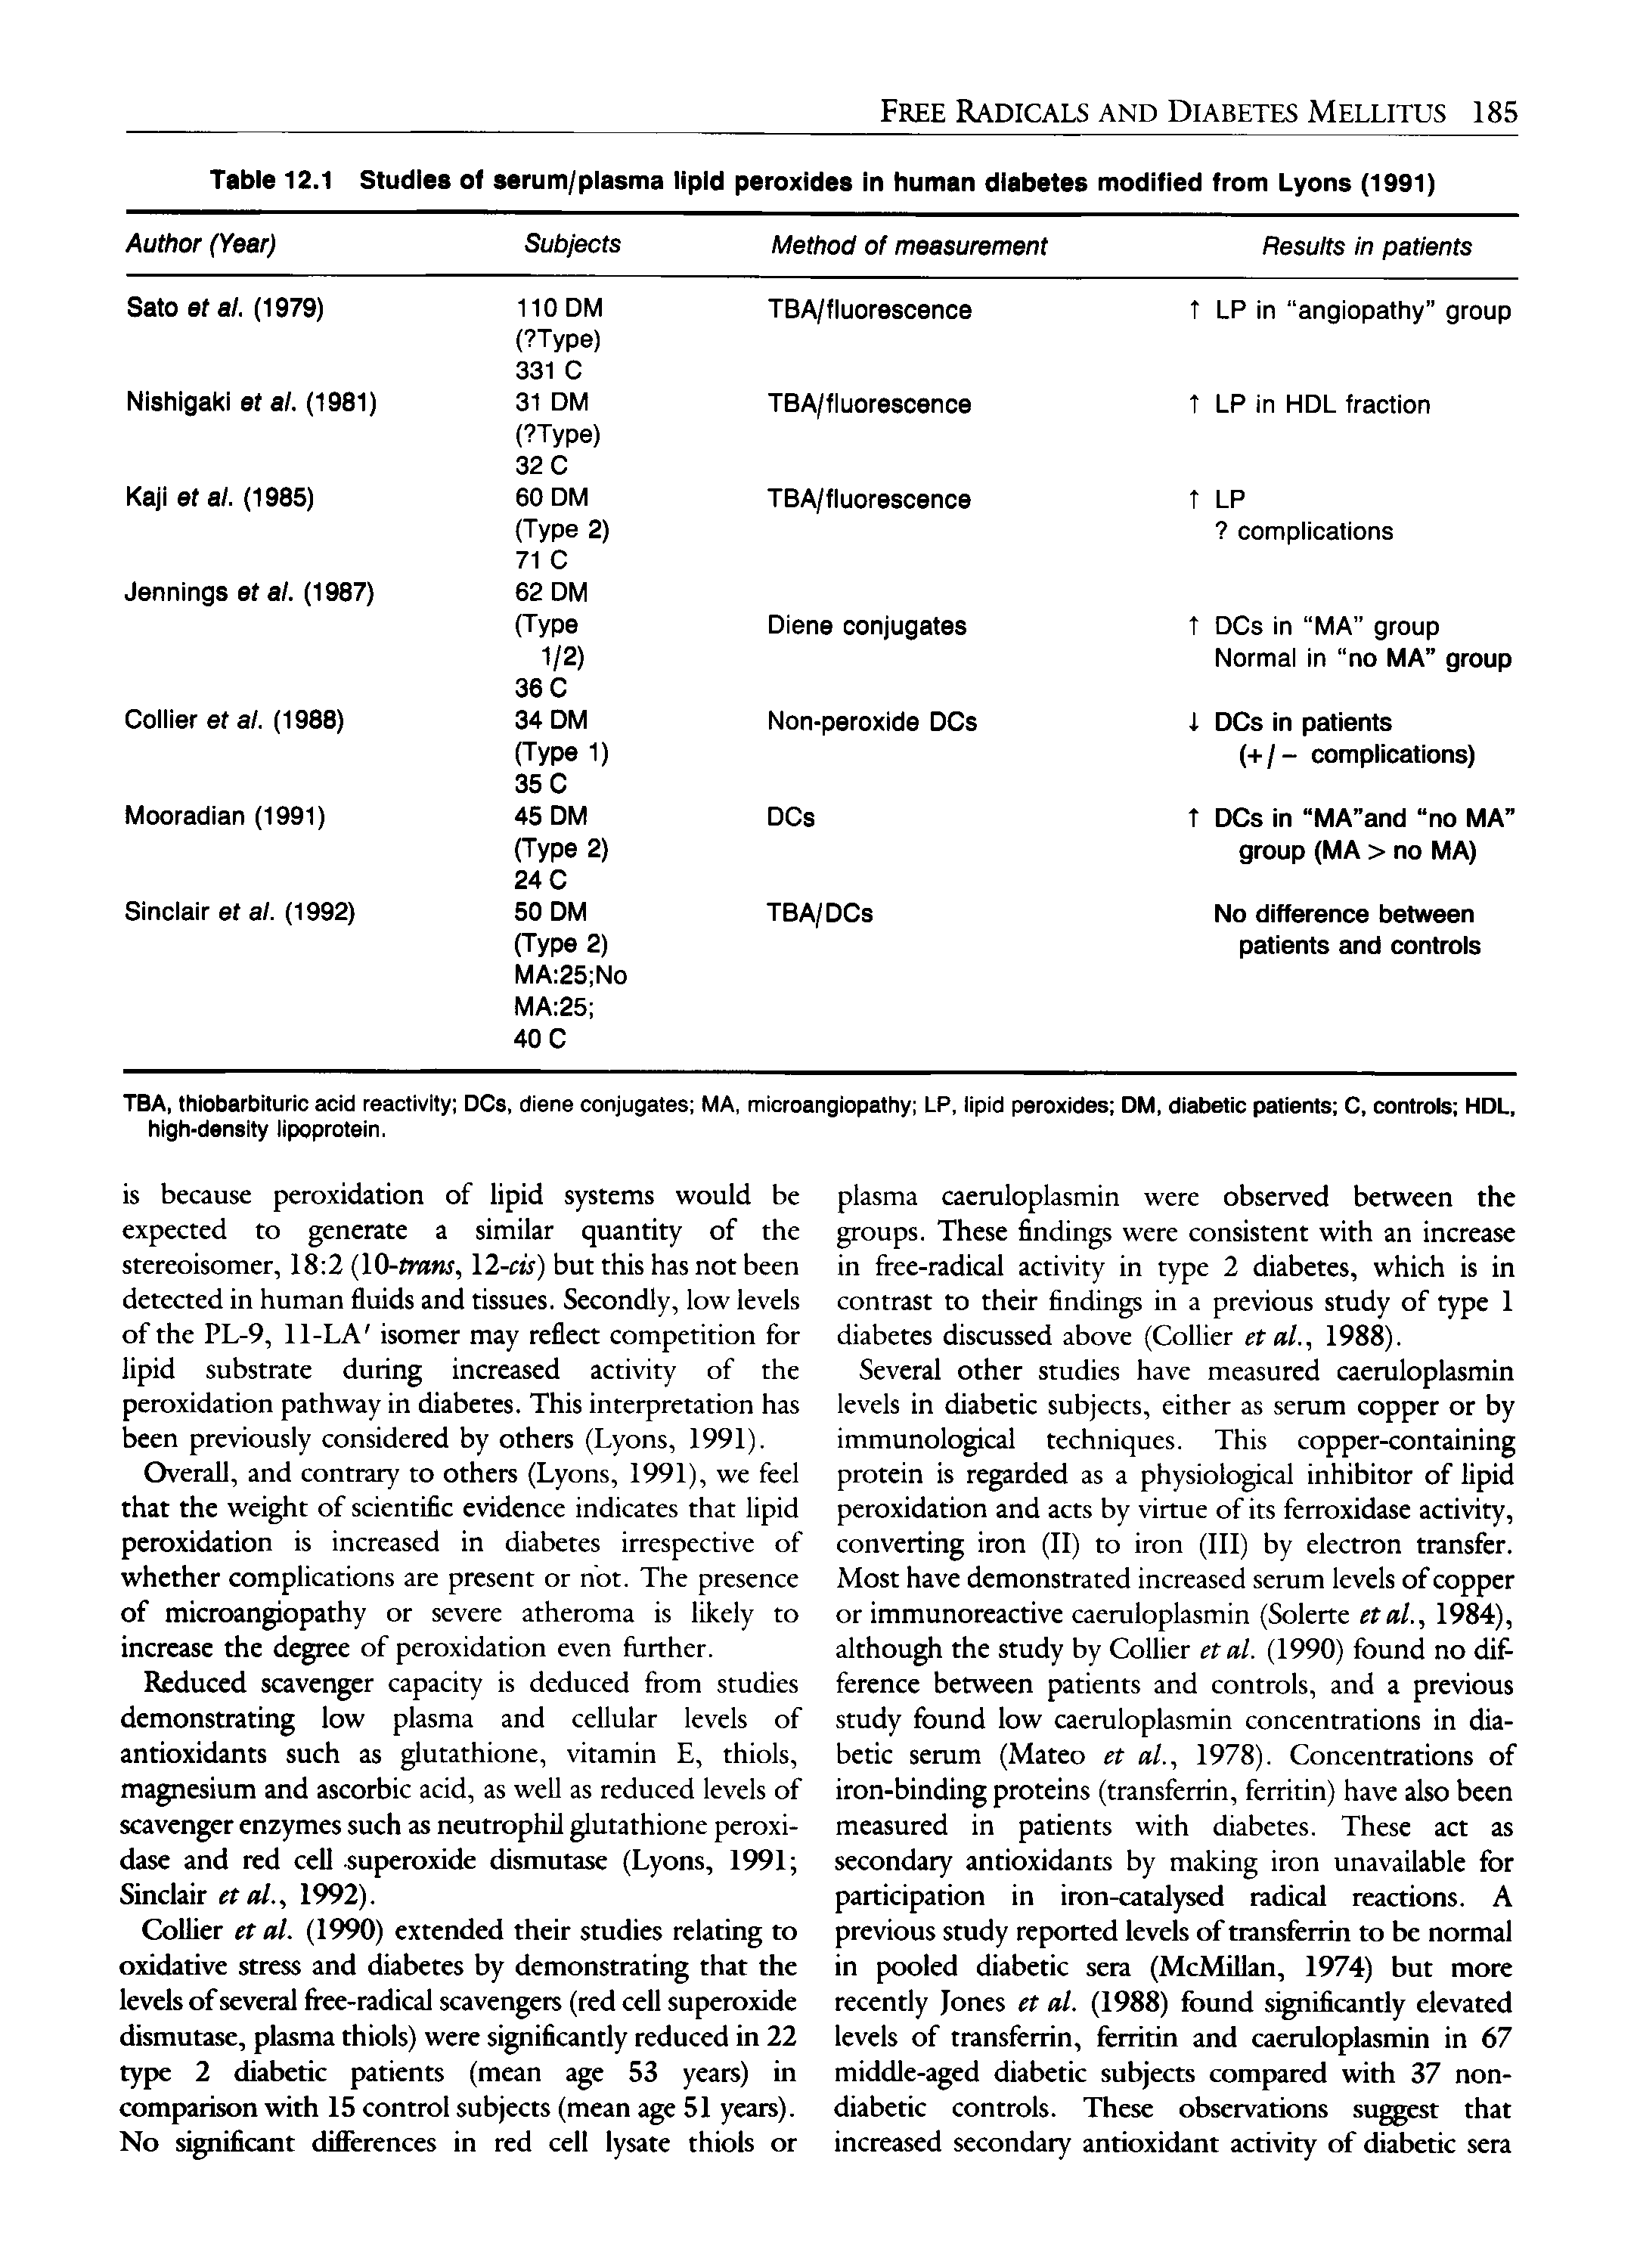 Table 12.1 Studies of serum/plasma lipid peroxides in human diabetes modified from Lyons (1991)...